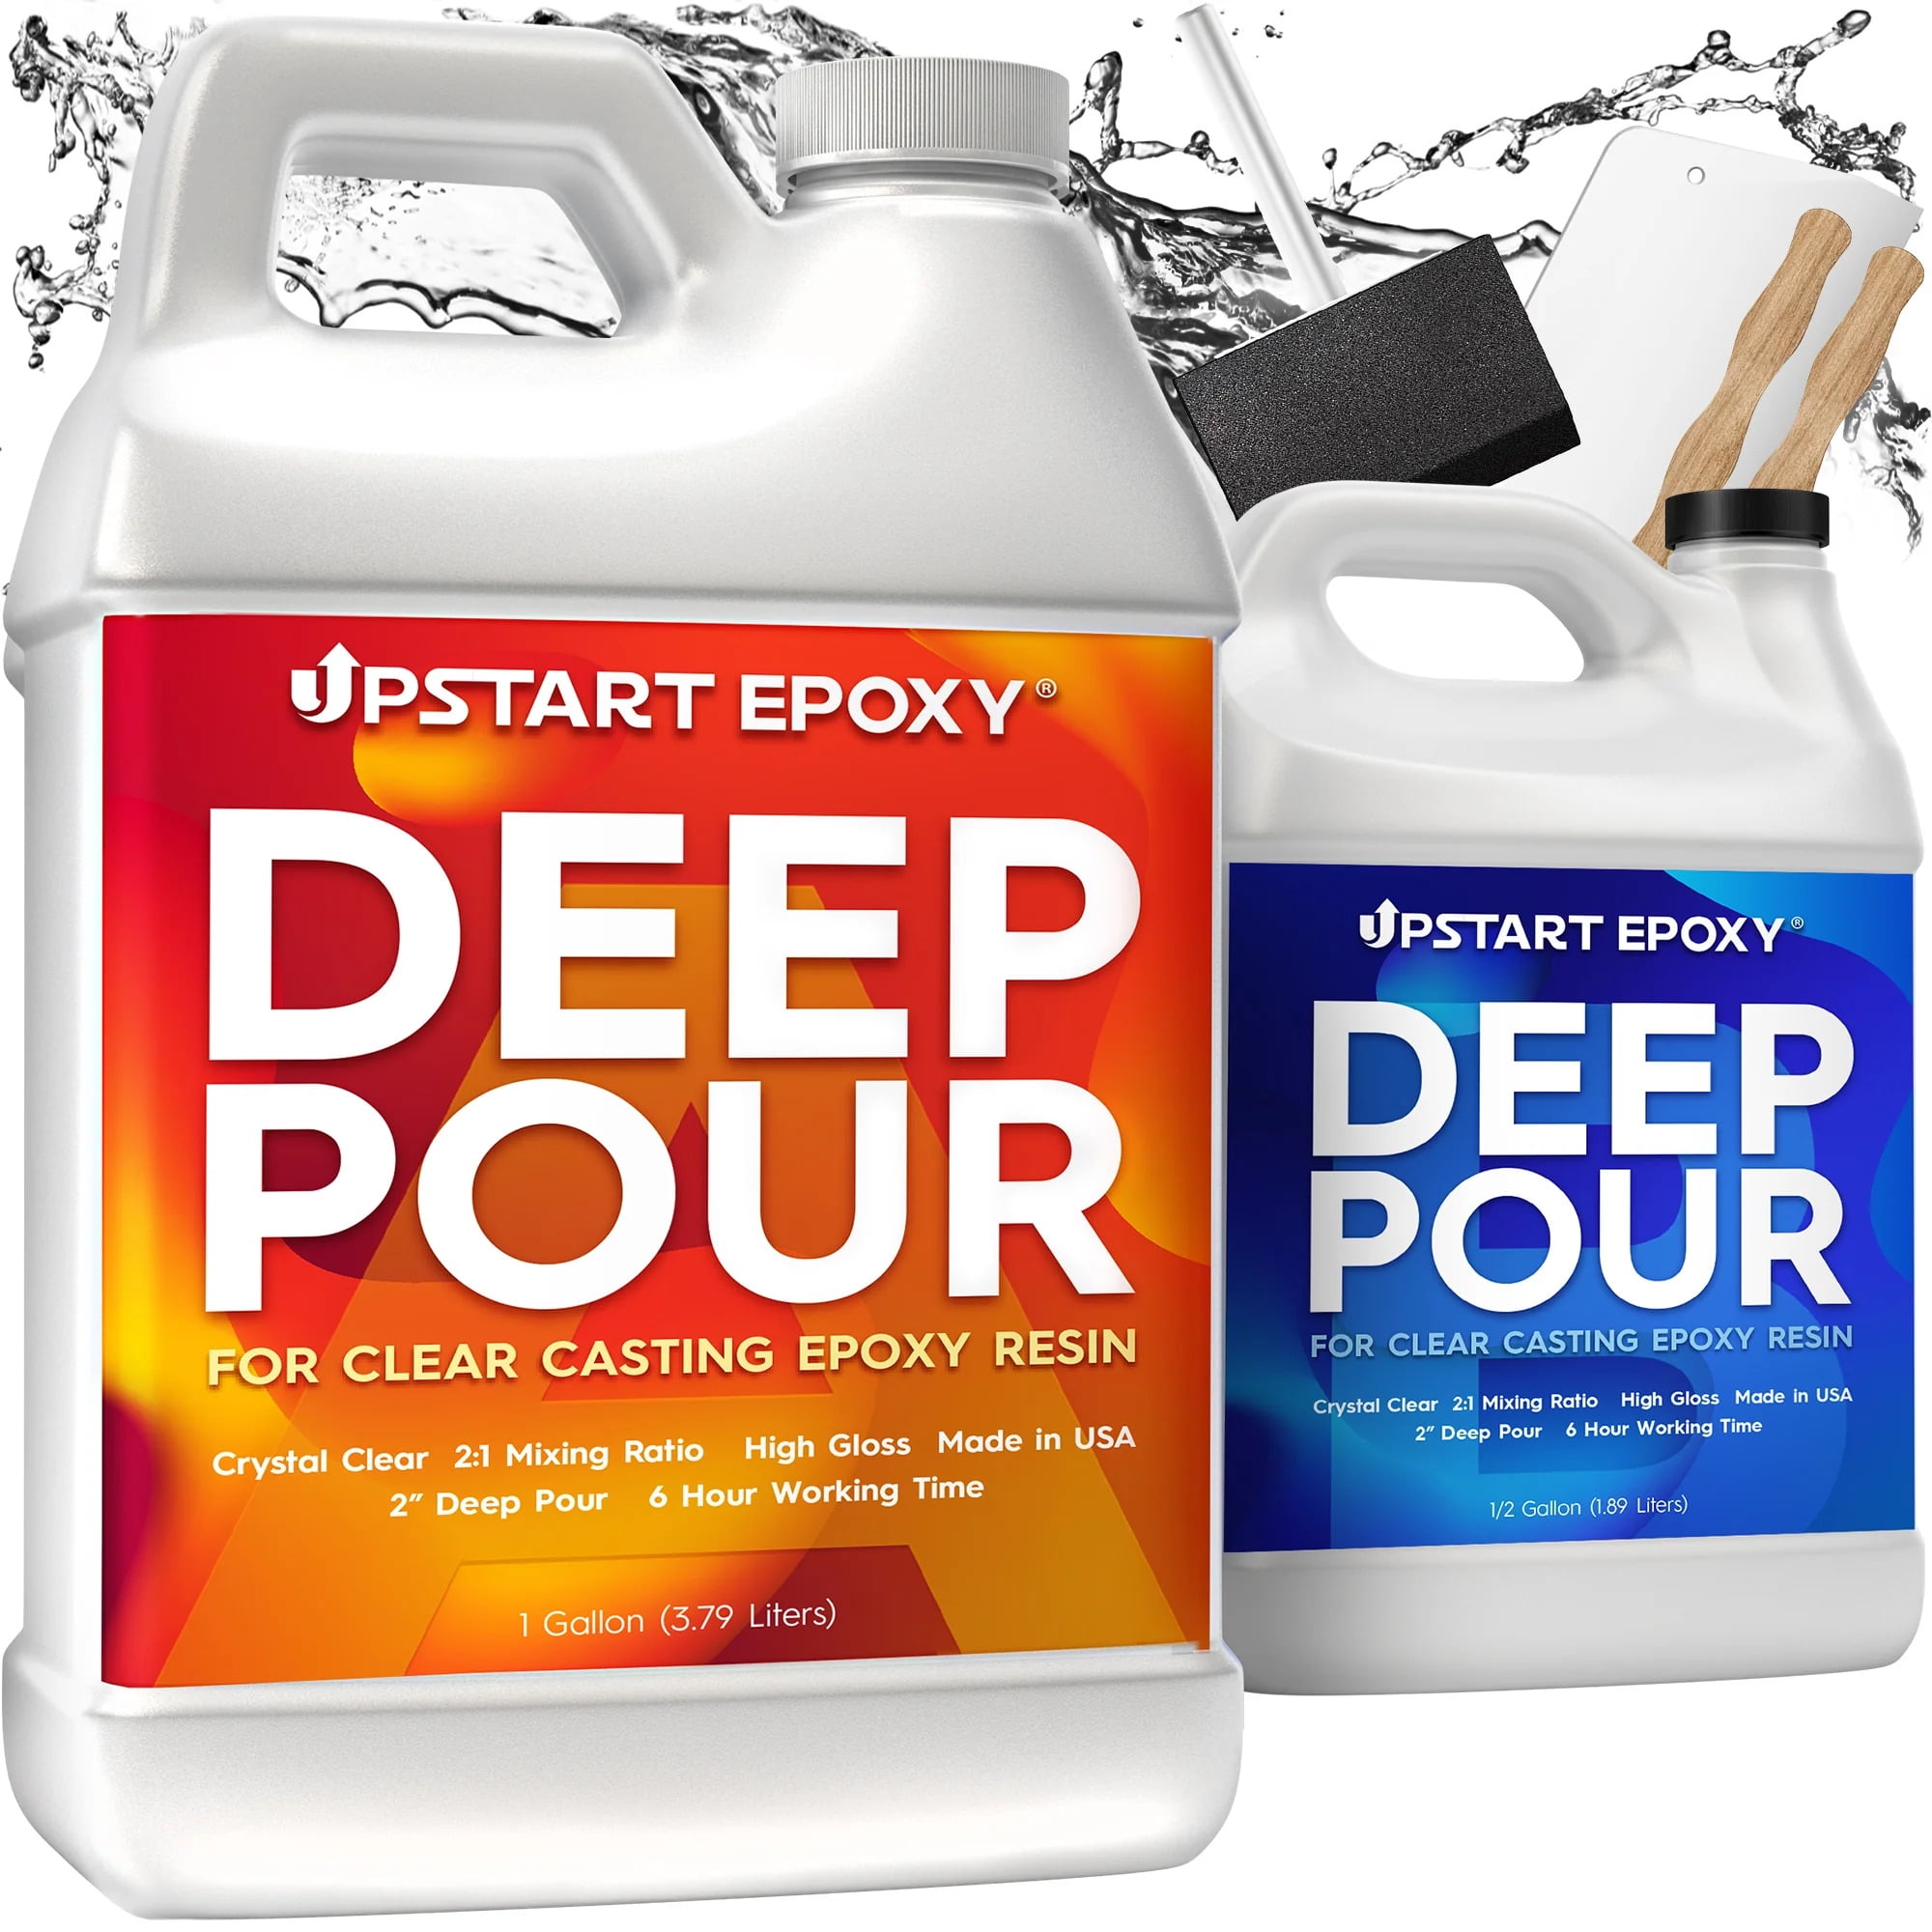 5-Star Crystal Clear Epoxy Resin- 3 Gallon Kit (2:1 Mix Ratio)